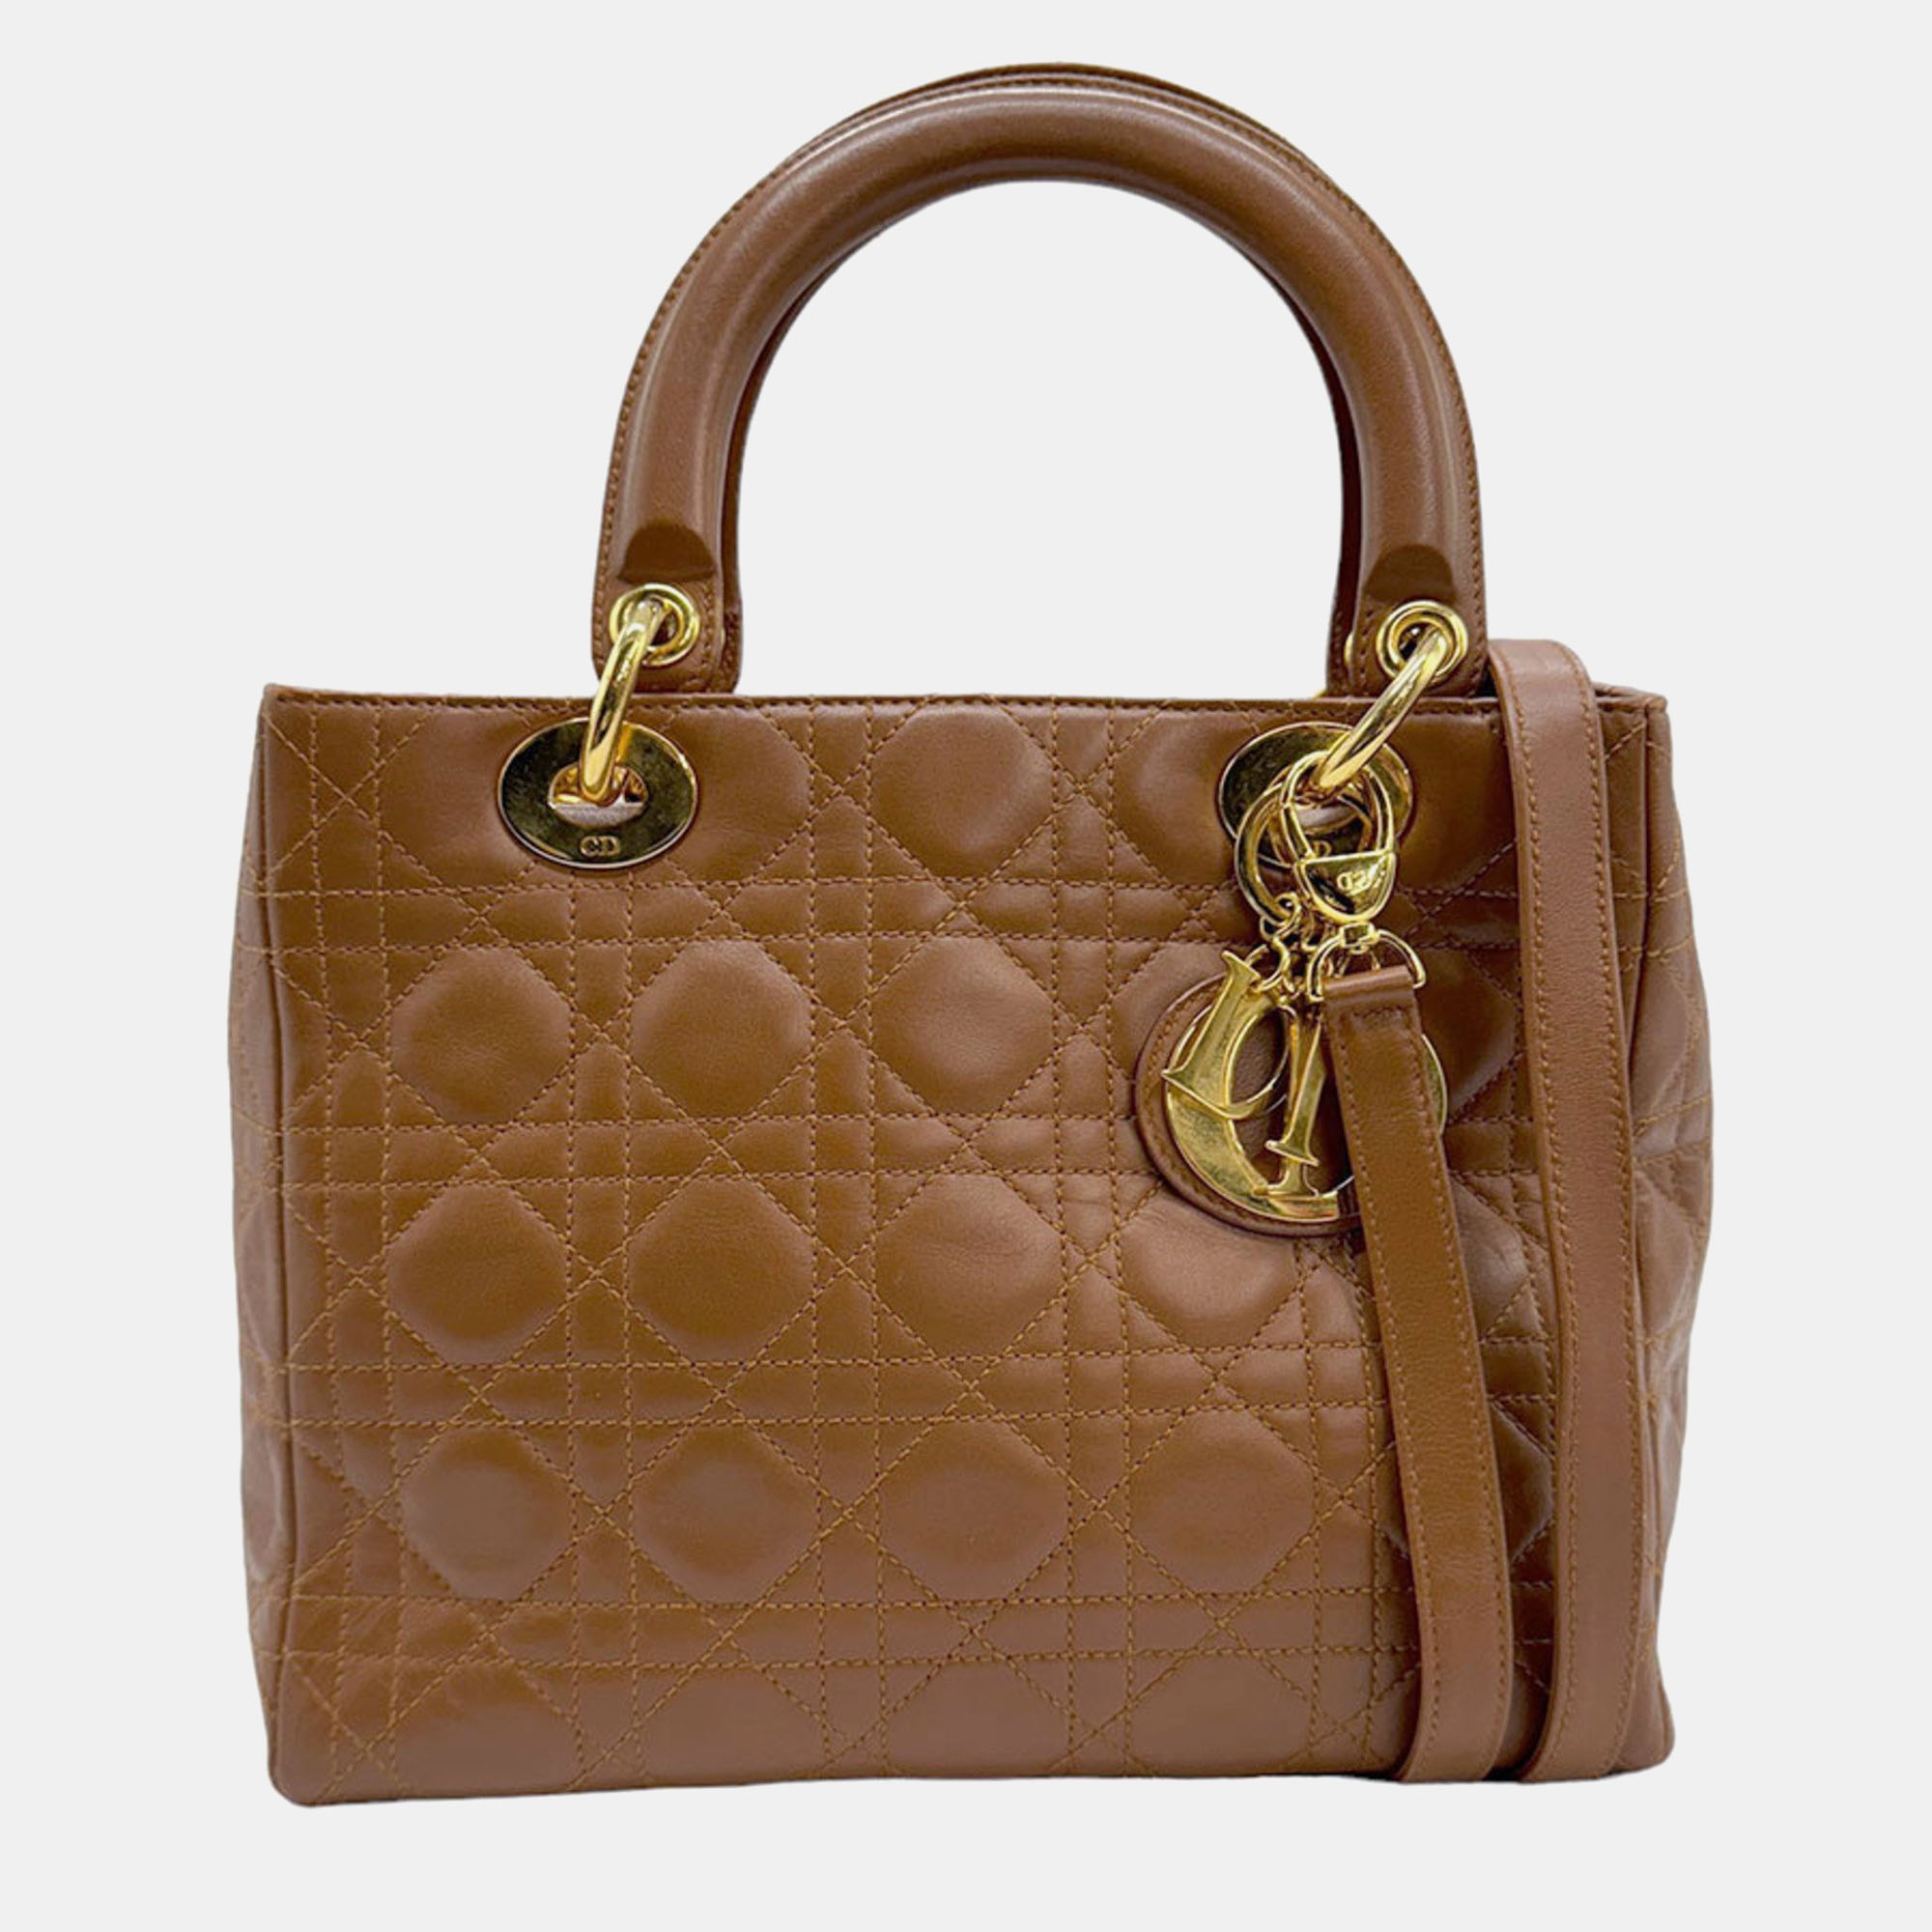 Dior brown leather medium lady dior tote bag